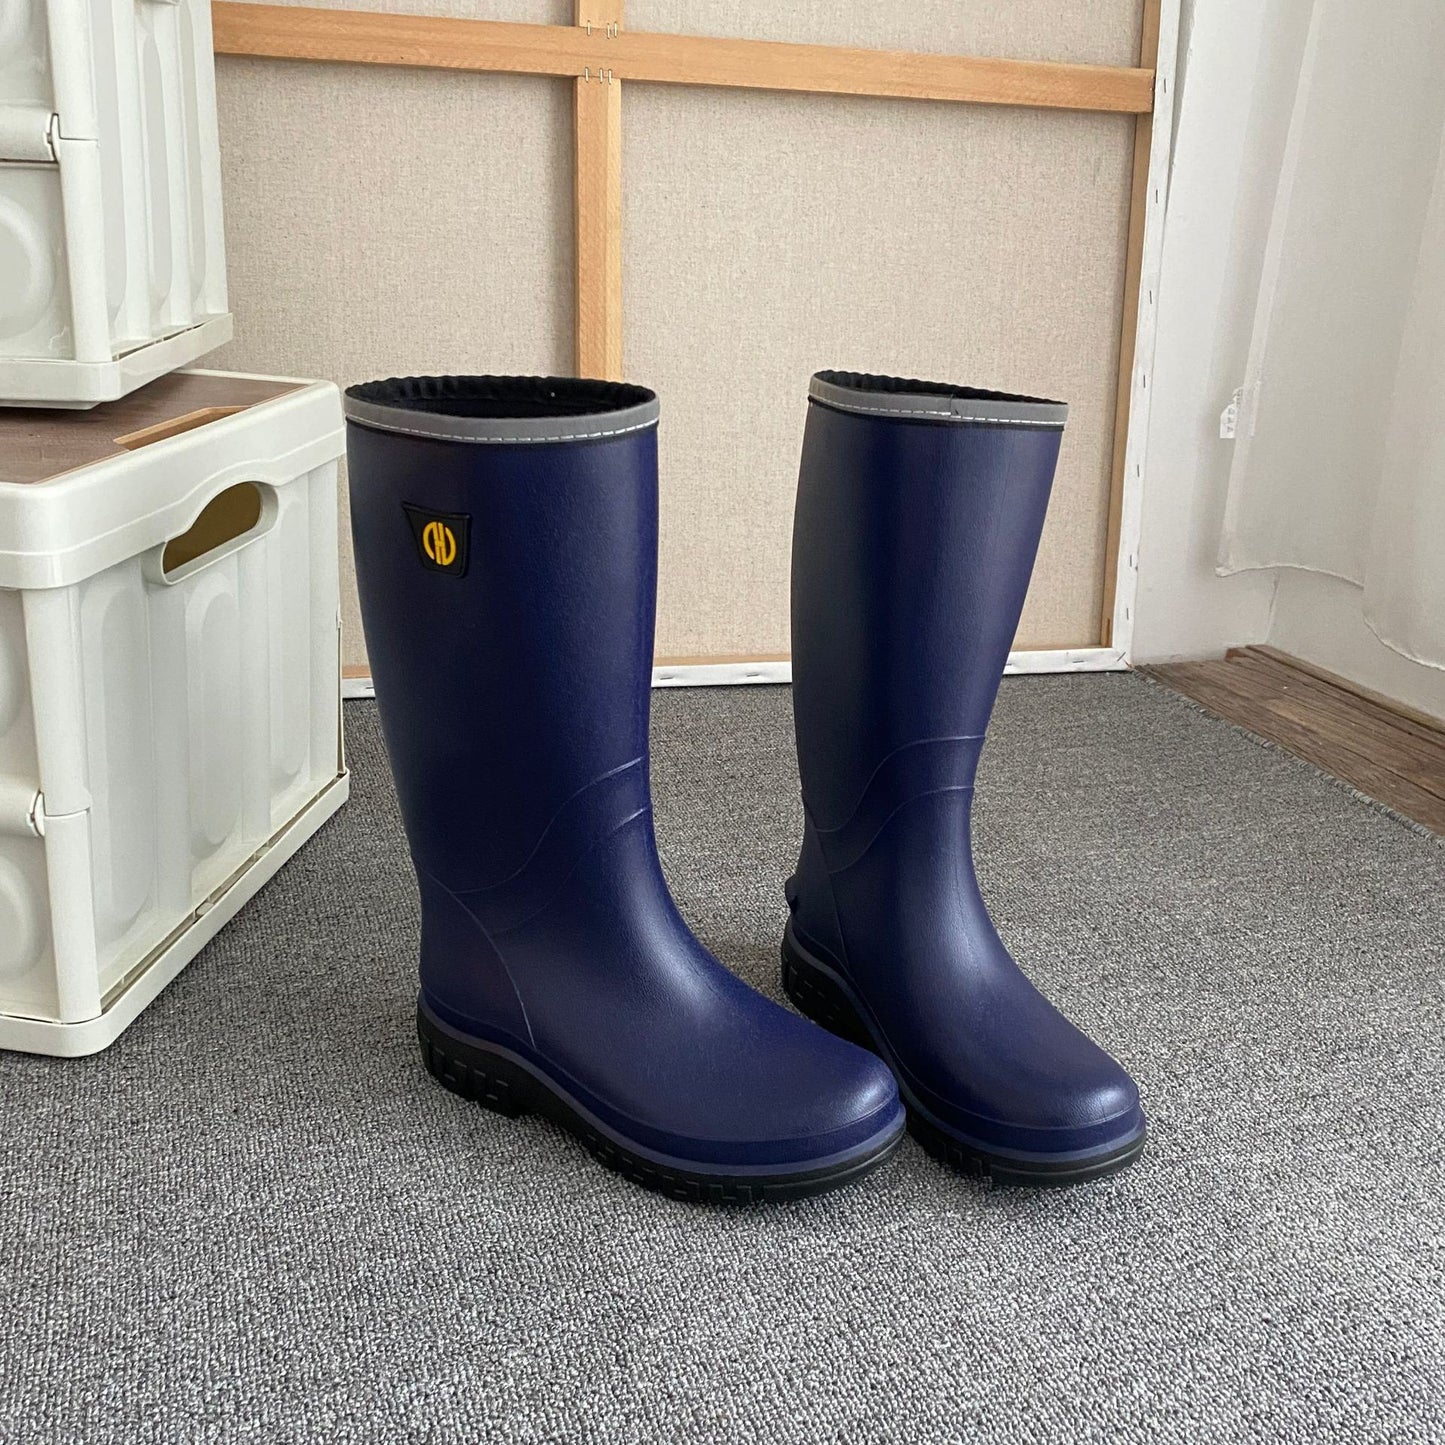 Men's Rain Boots Wear-resistant Waterproof Non-slip Knee High Rain Shoes For Outdoor Working Fishing